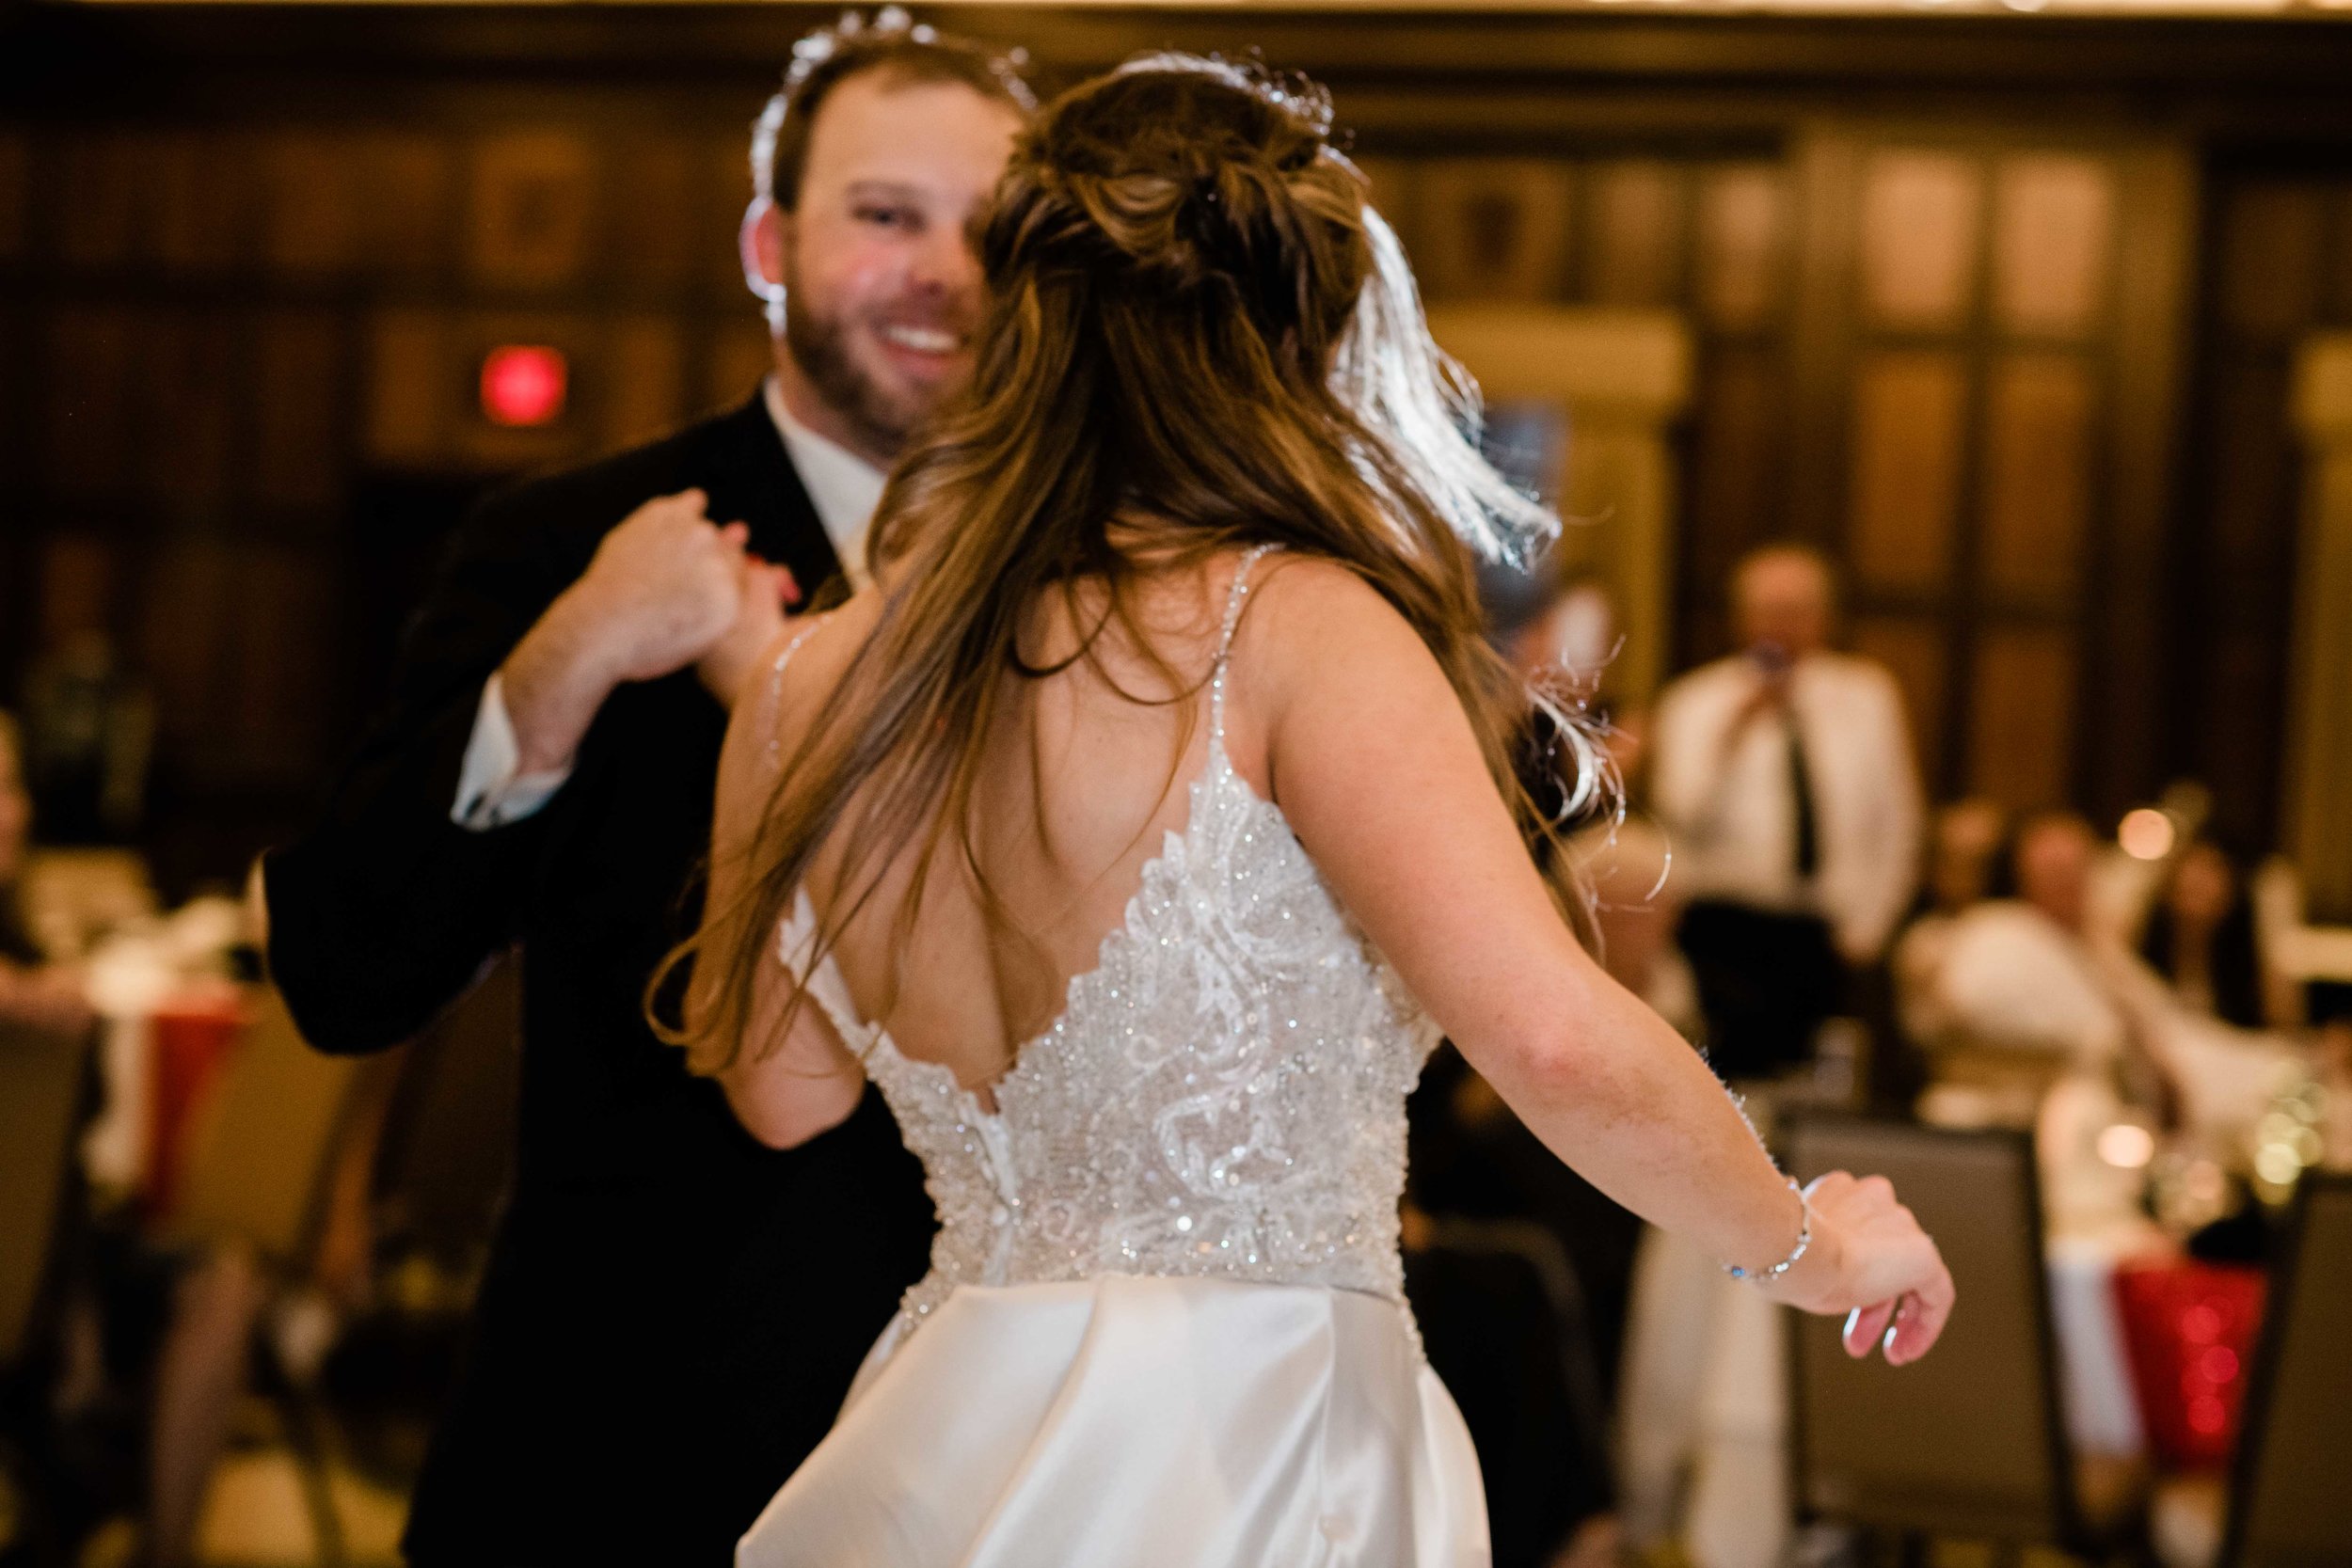 Groom twirling bride on the dance floor